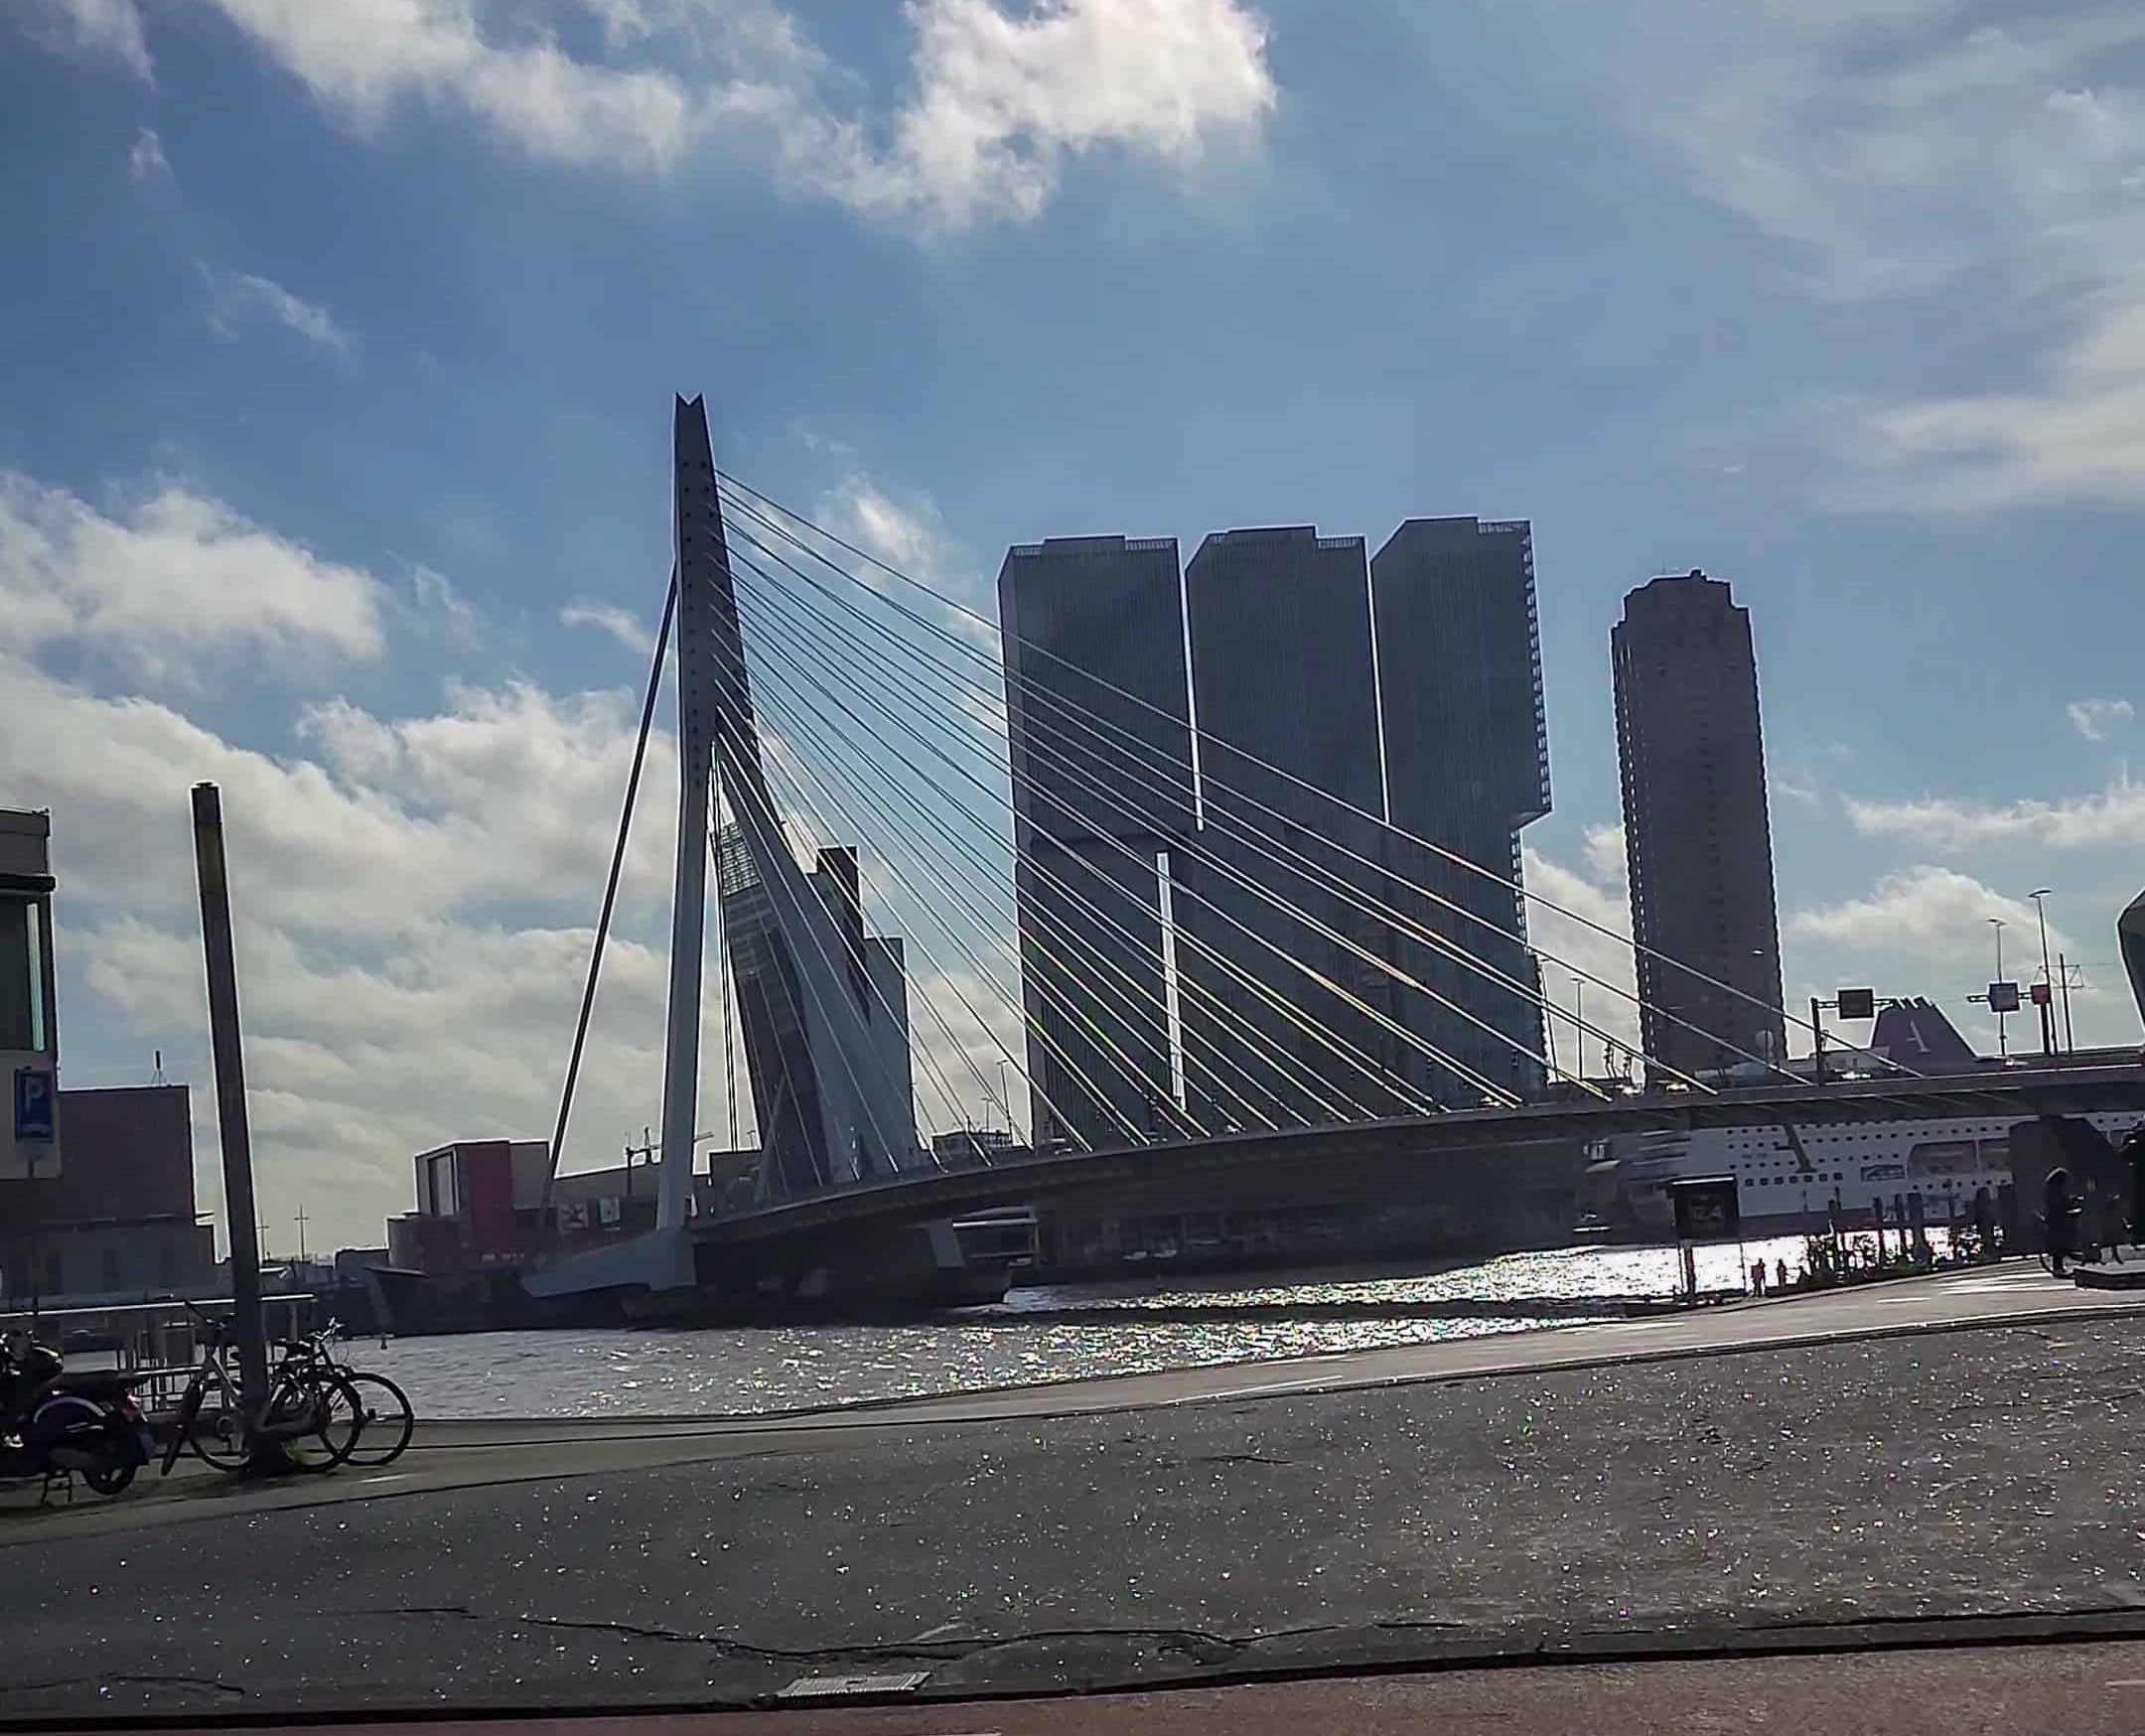 erasmus bridge in rotterdam